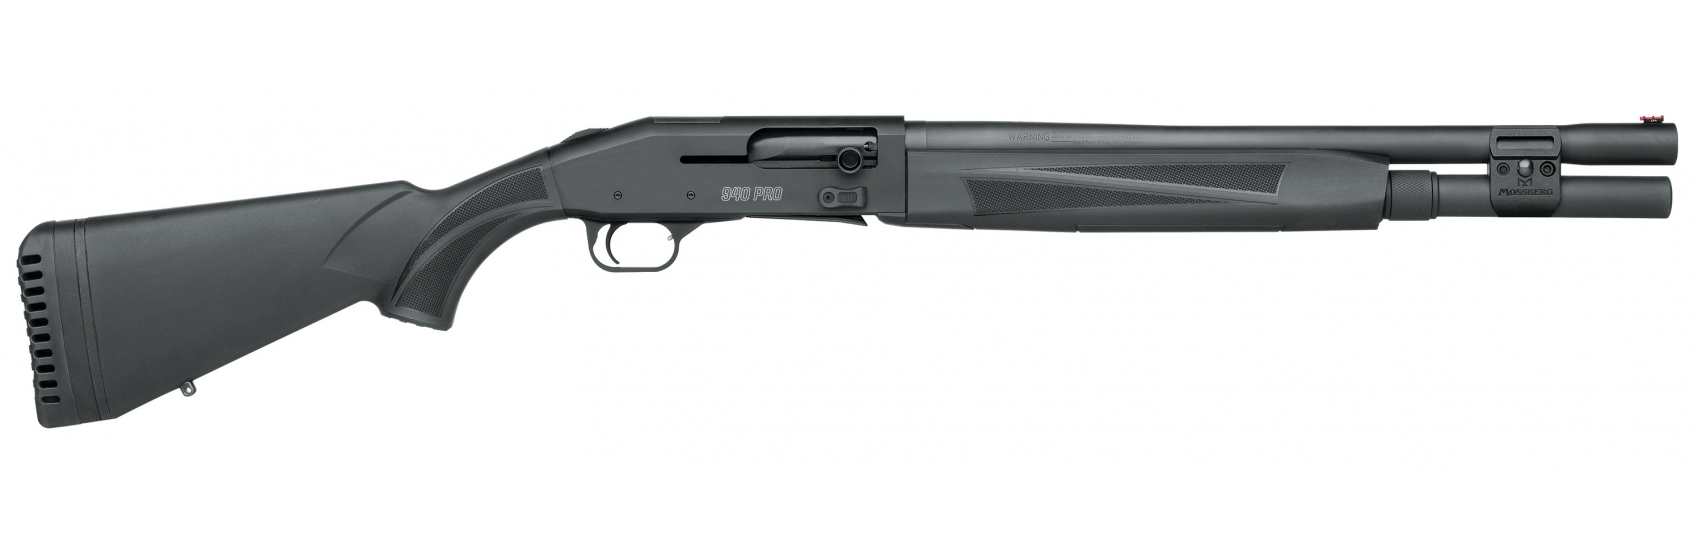 the mossberg 940 pro tactical 12ga shotgun